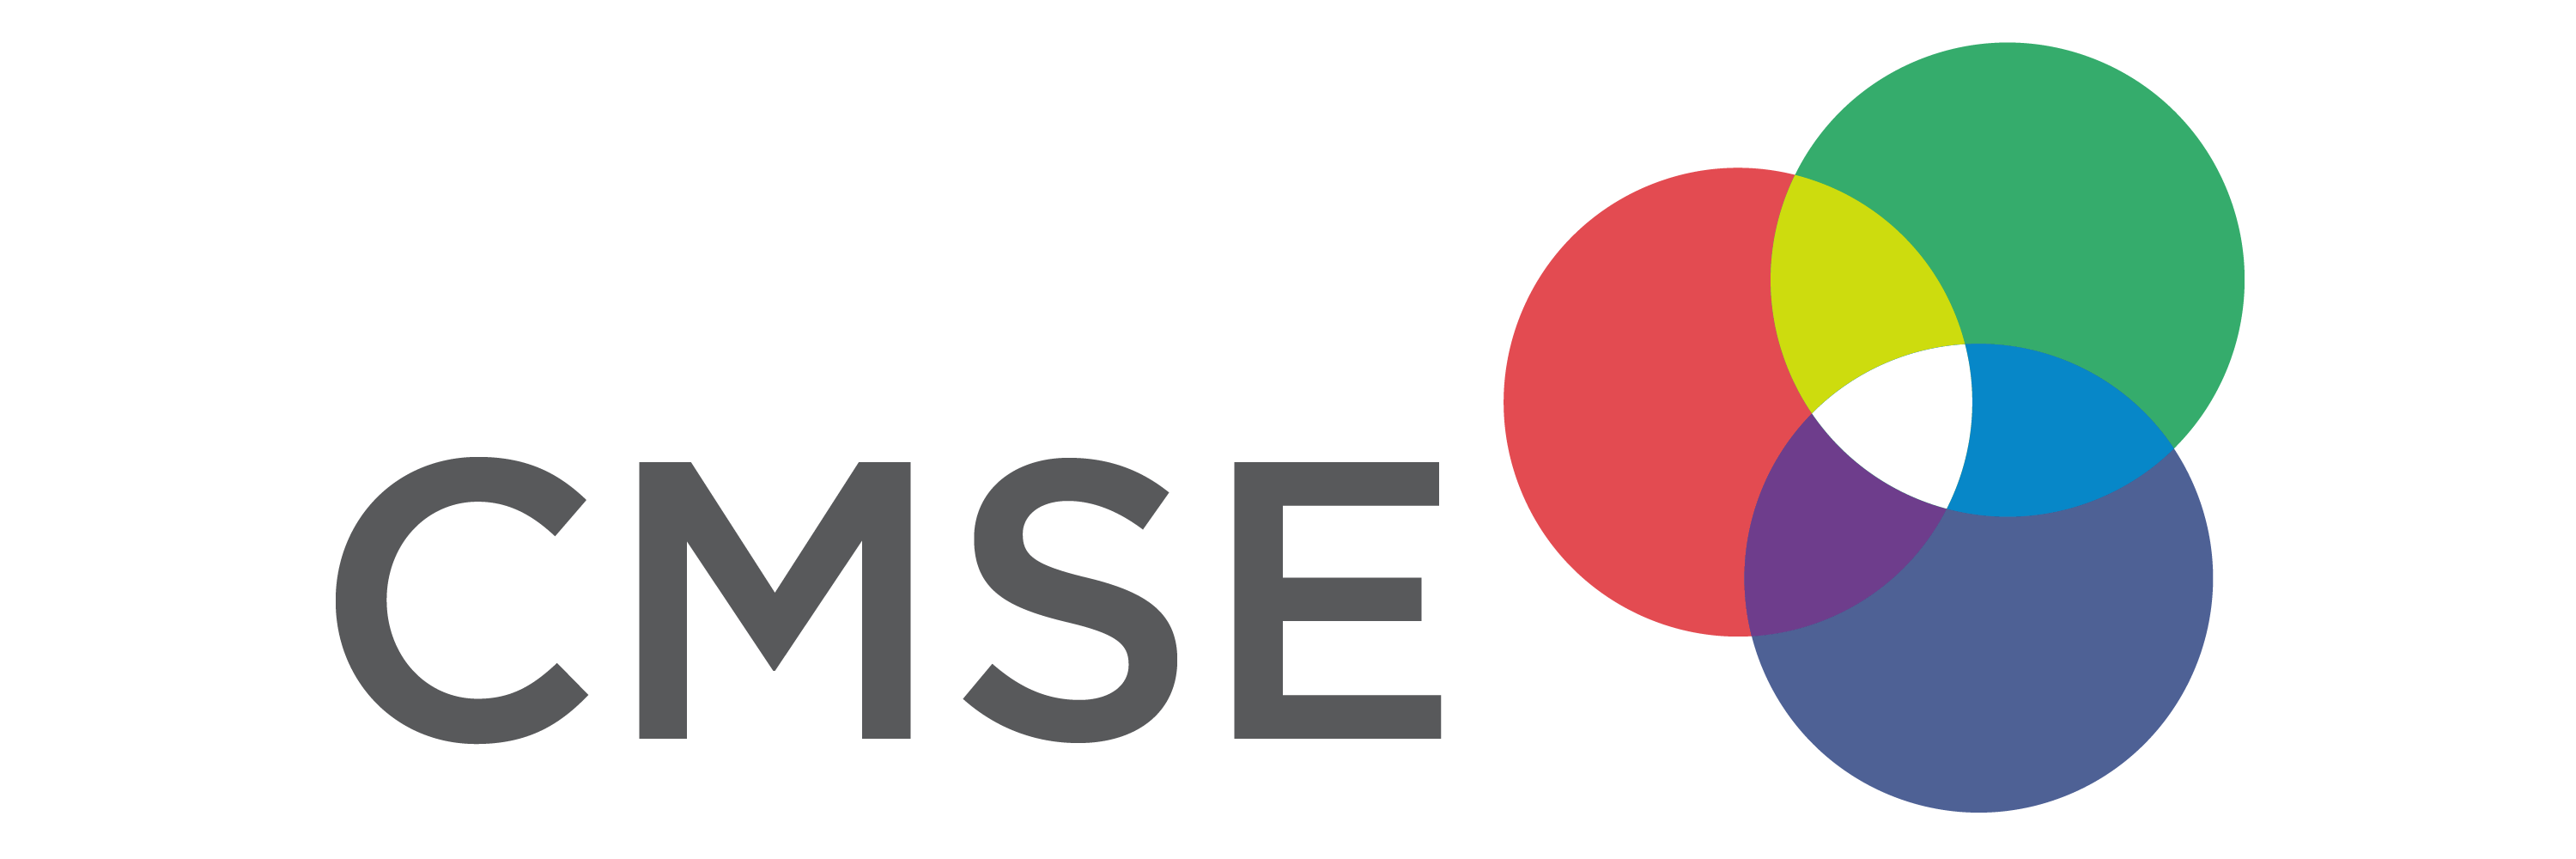 cmse_logo